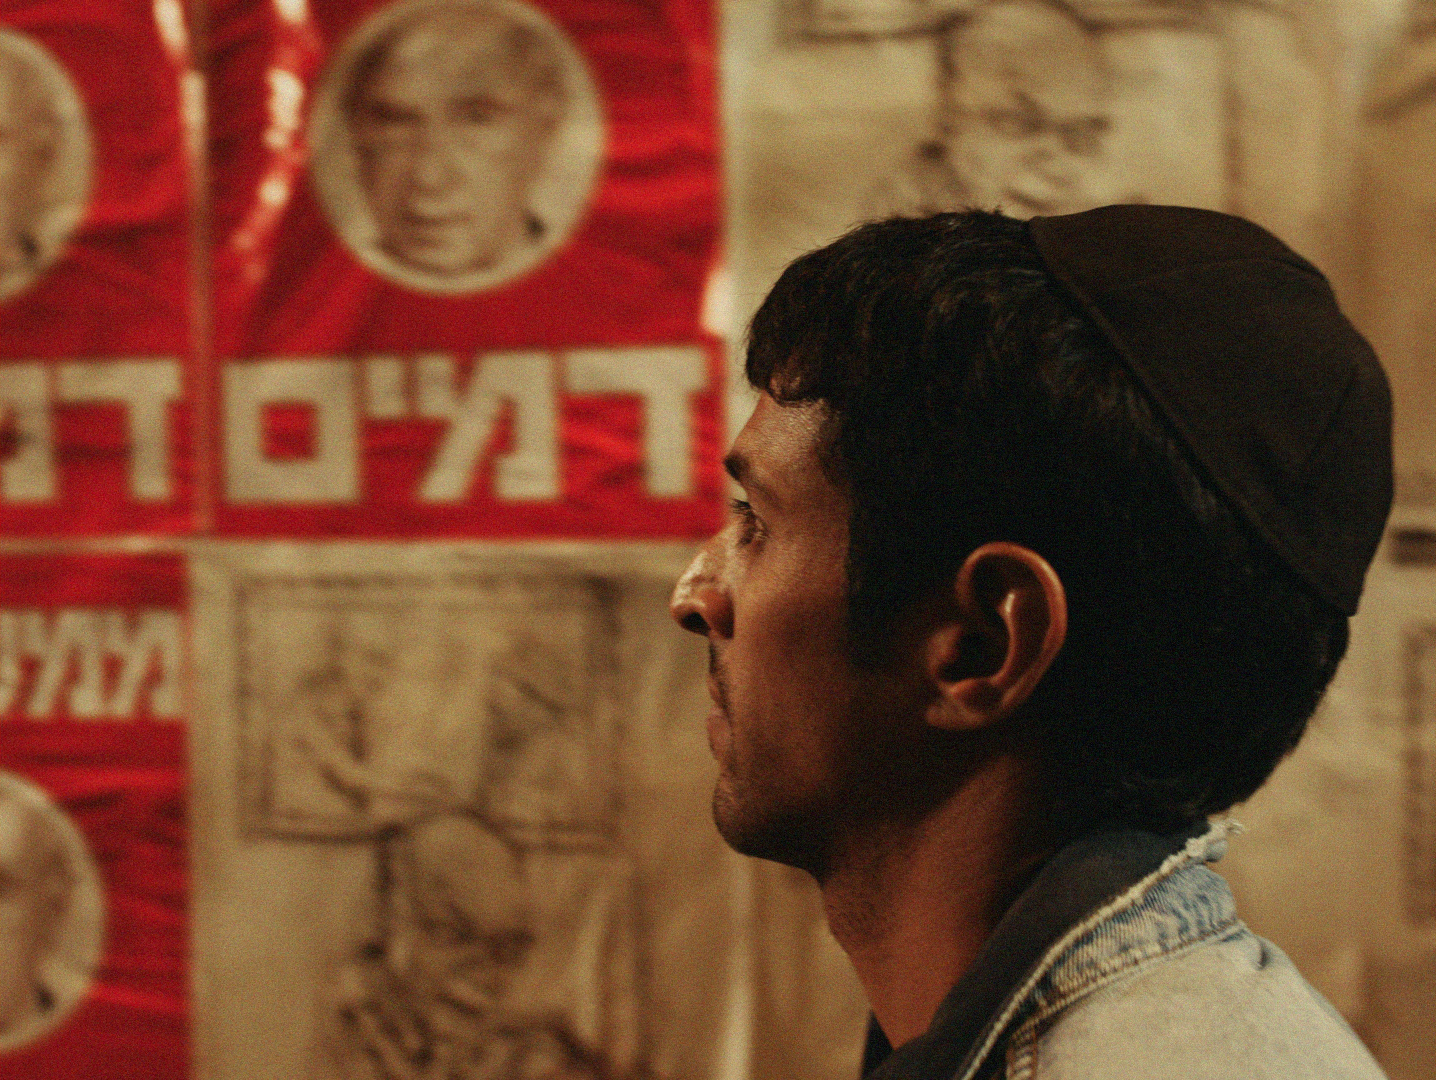 Yehuda Nahari Halev plays Yagil Amir, Rabin's killer, in a scene from Yaron Zilberman's film 